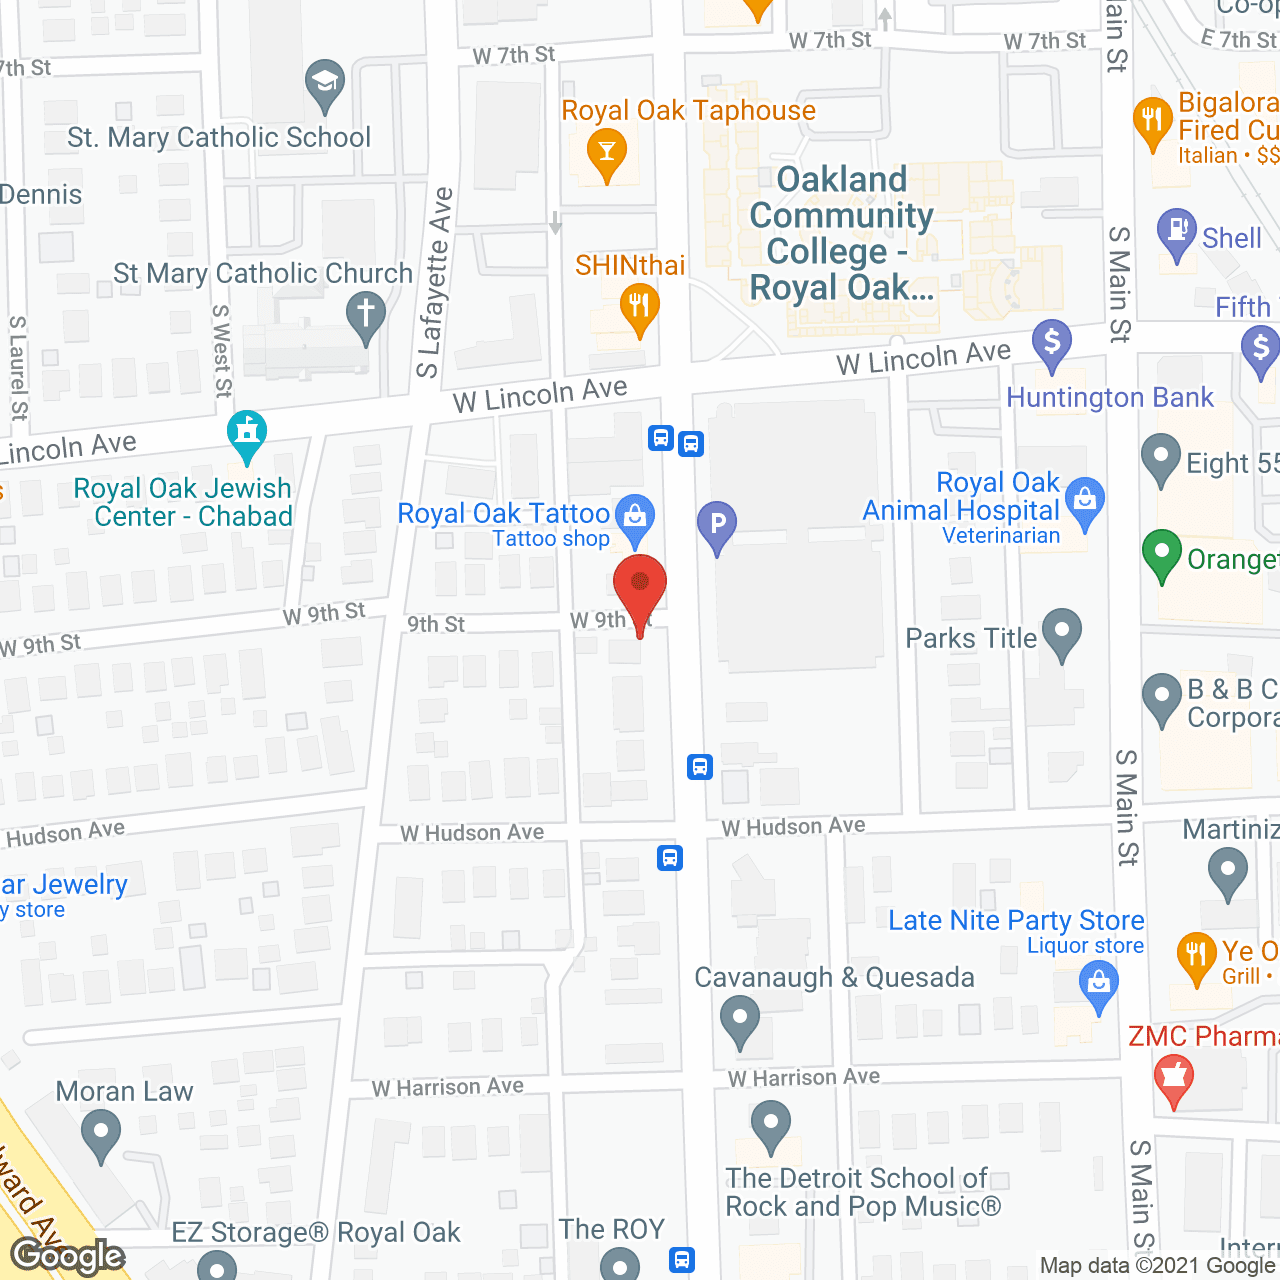 Caretel Inns of America in google map